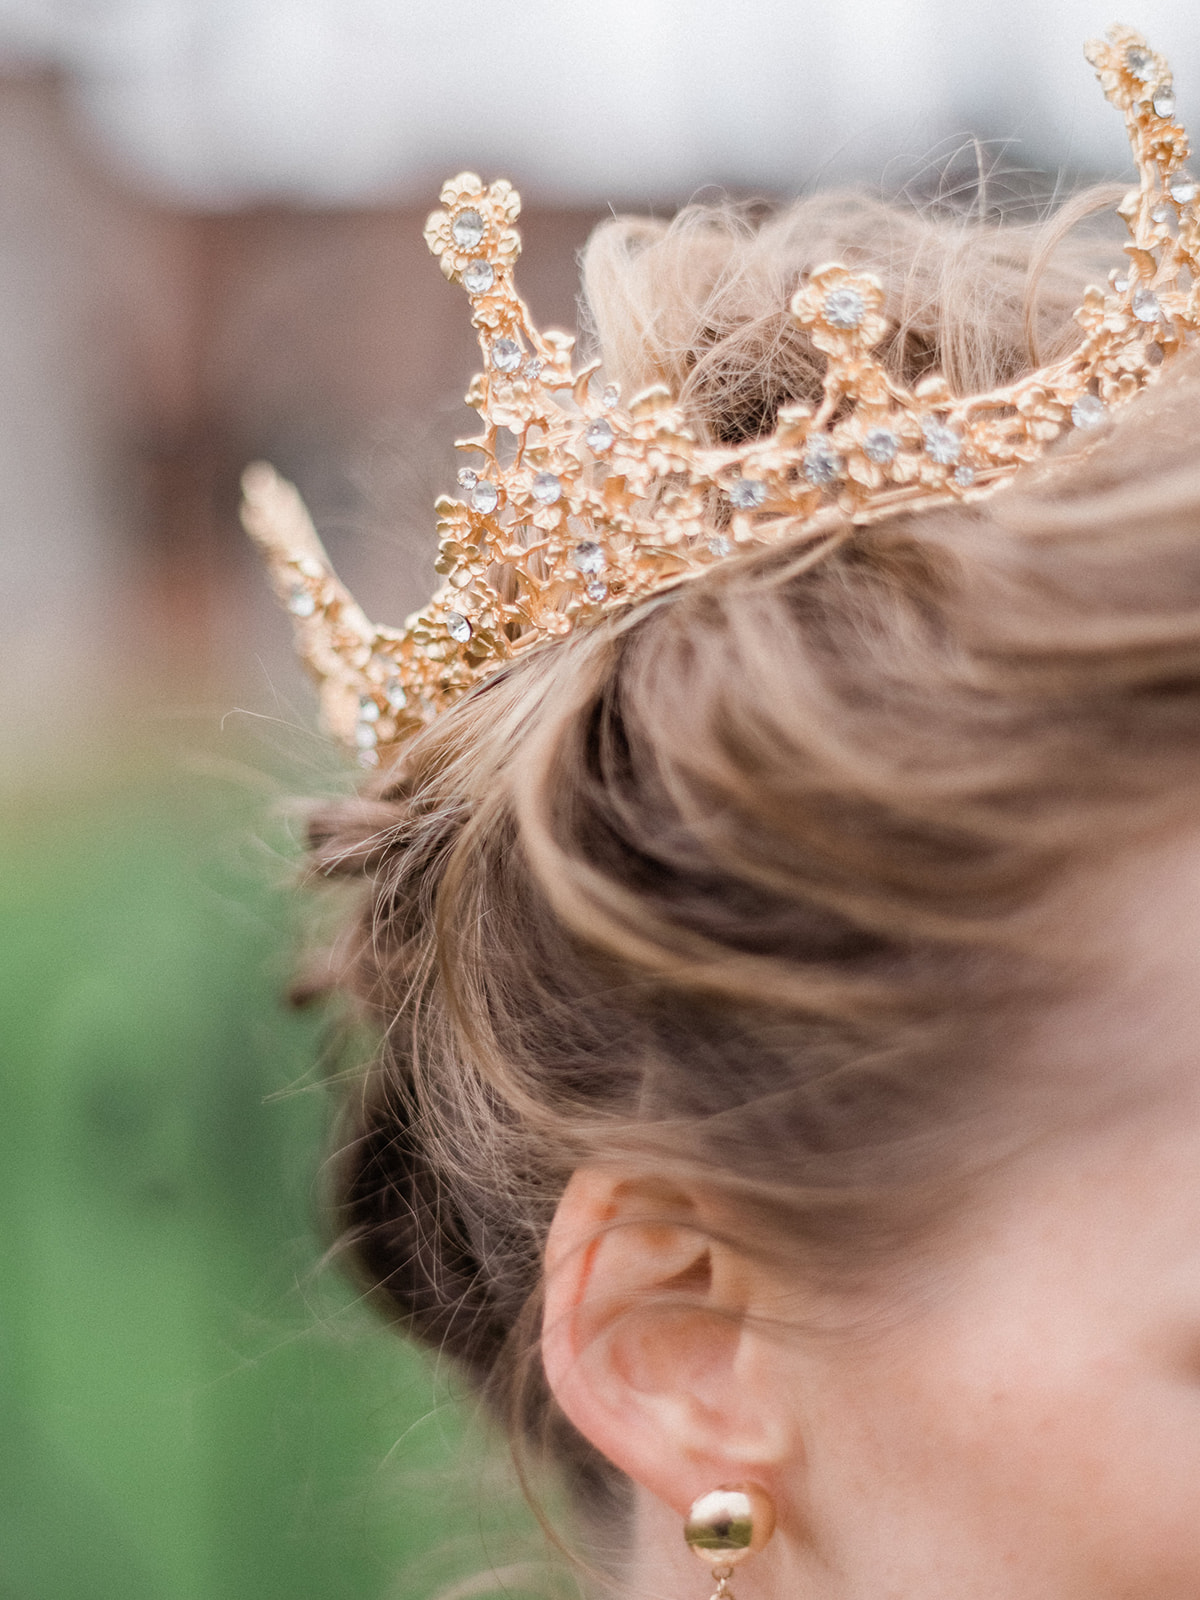 ornate crown for bride at wedding